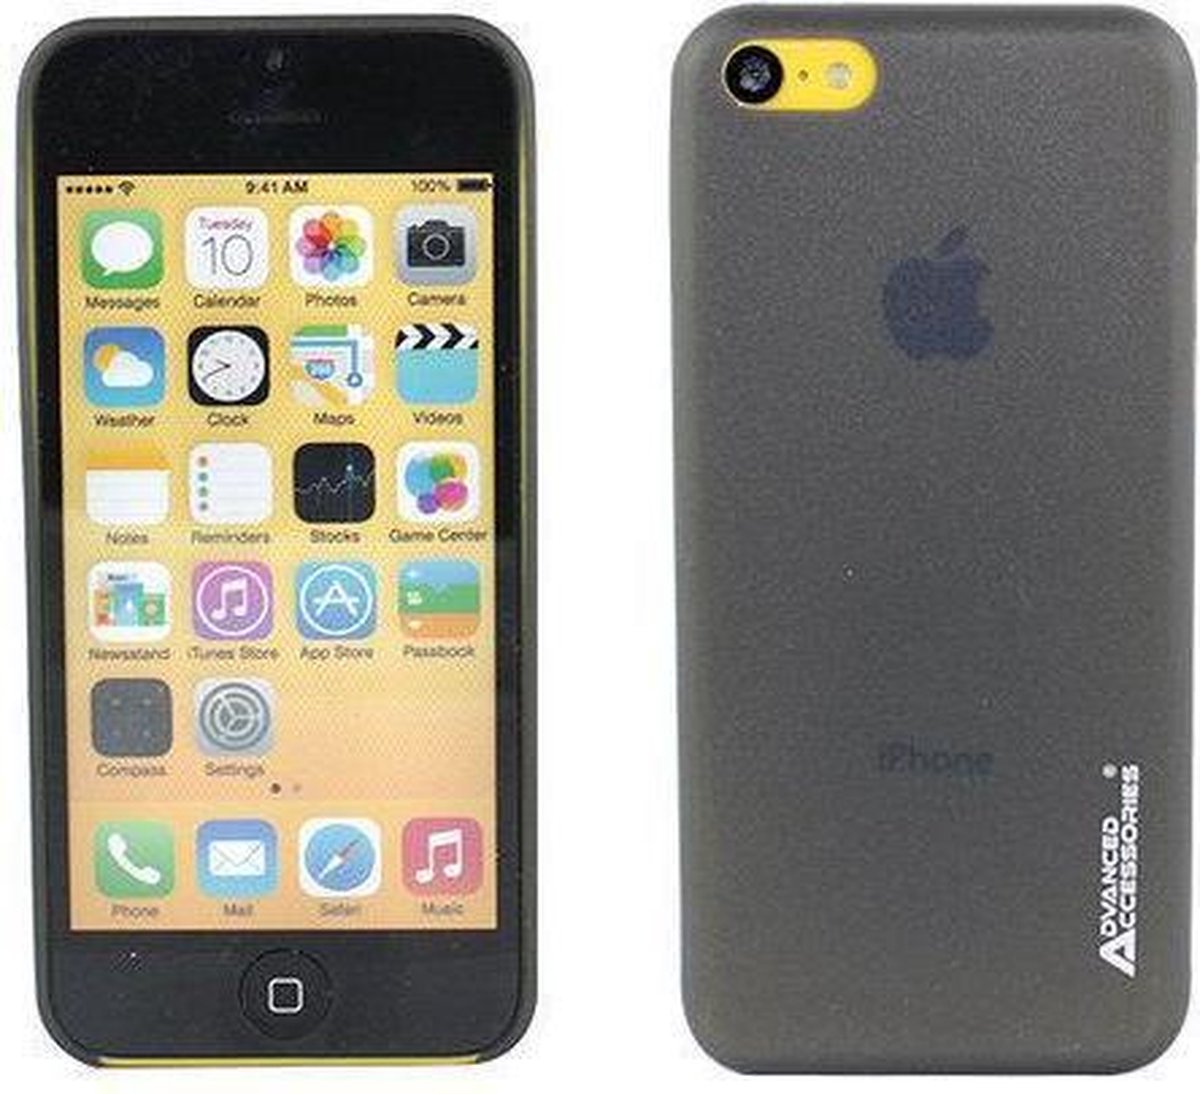 AA iPhone 5C GHOST Back Case zwart